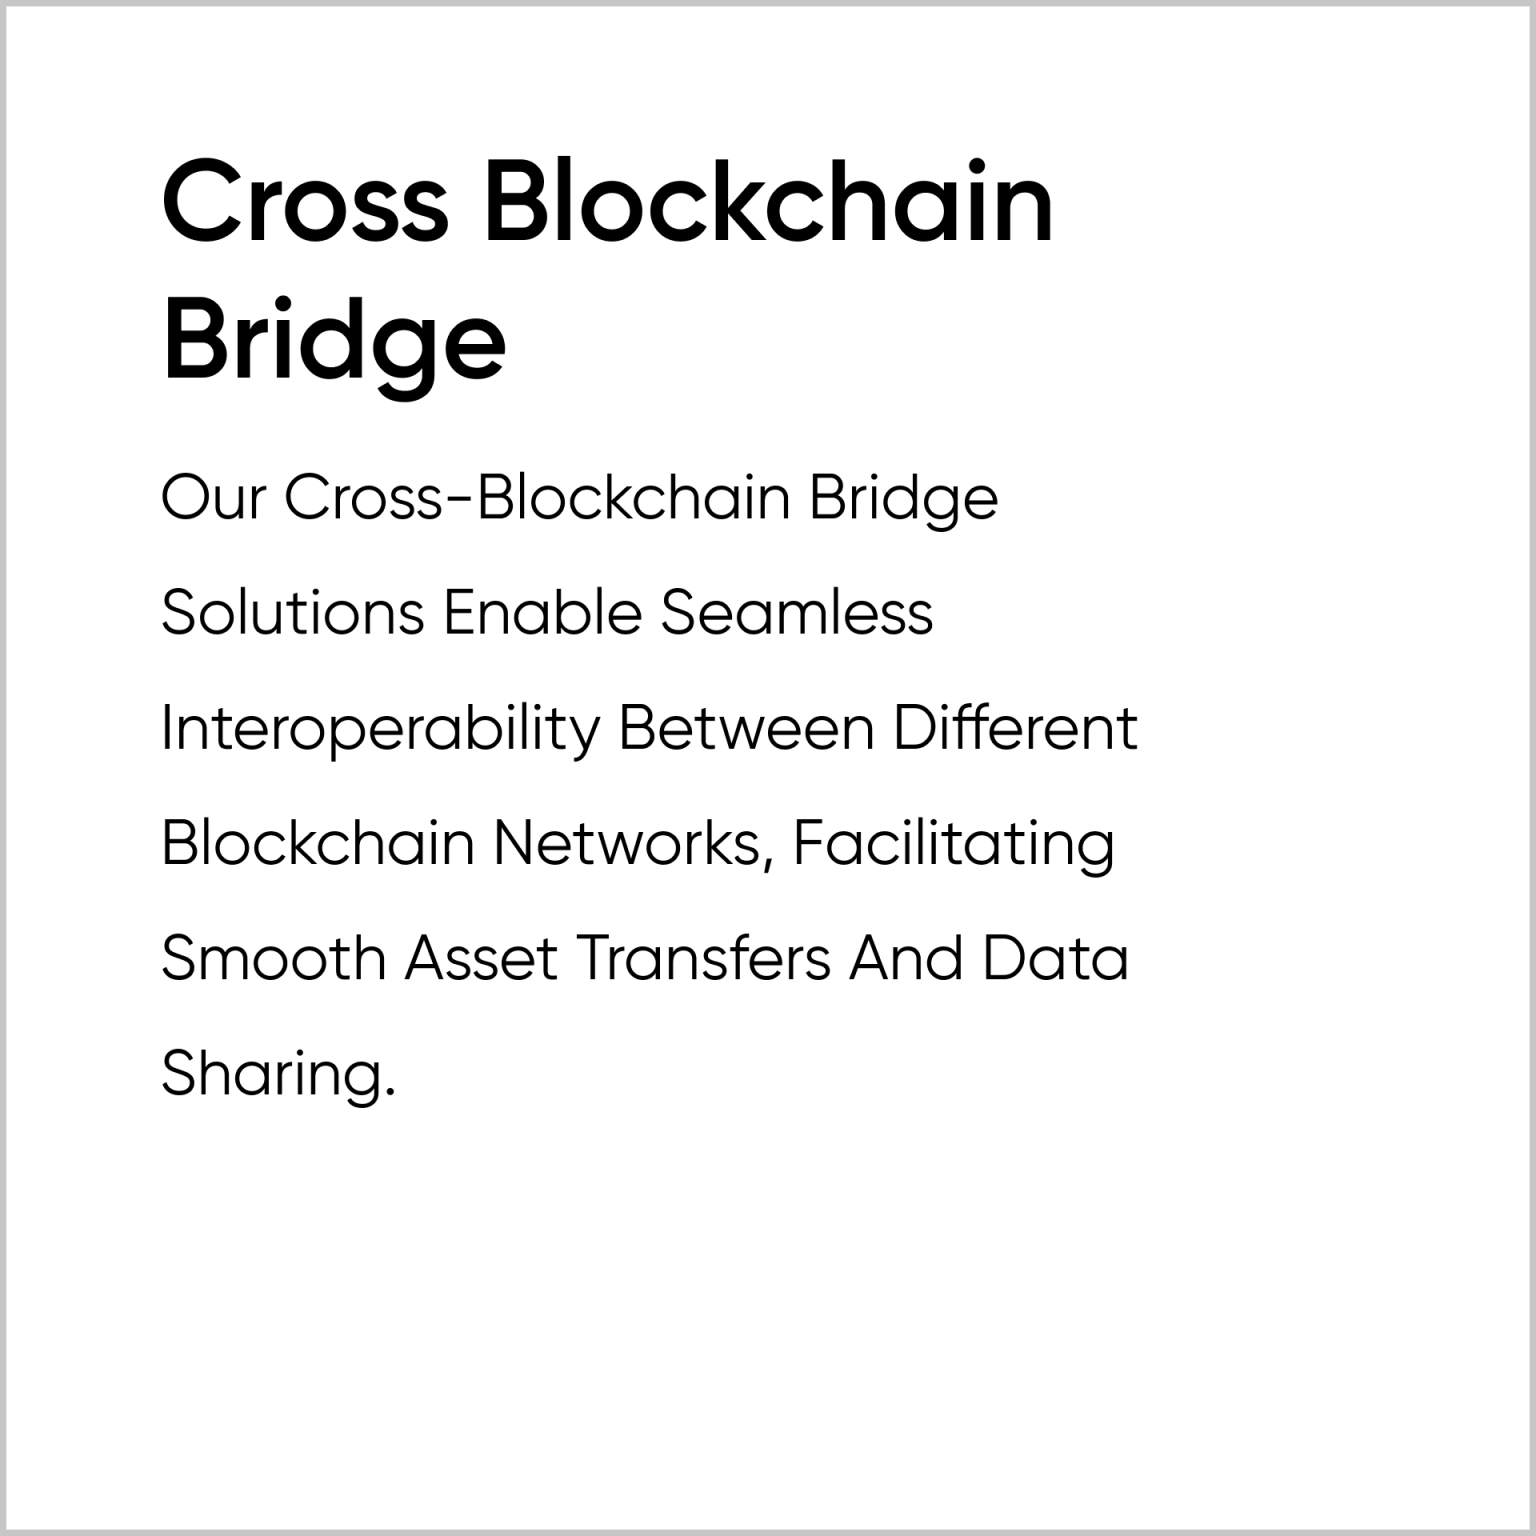 Cross Blockchain Bridge